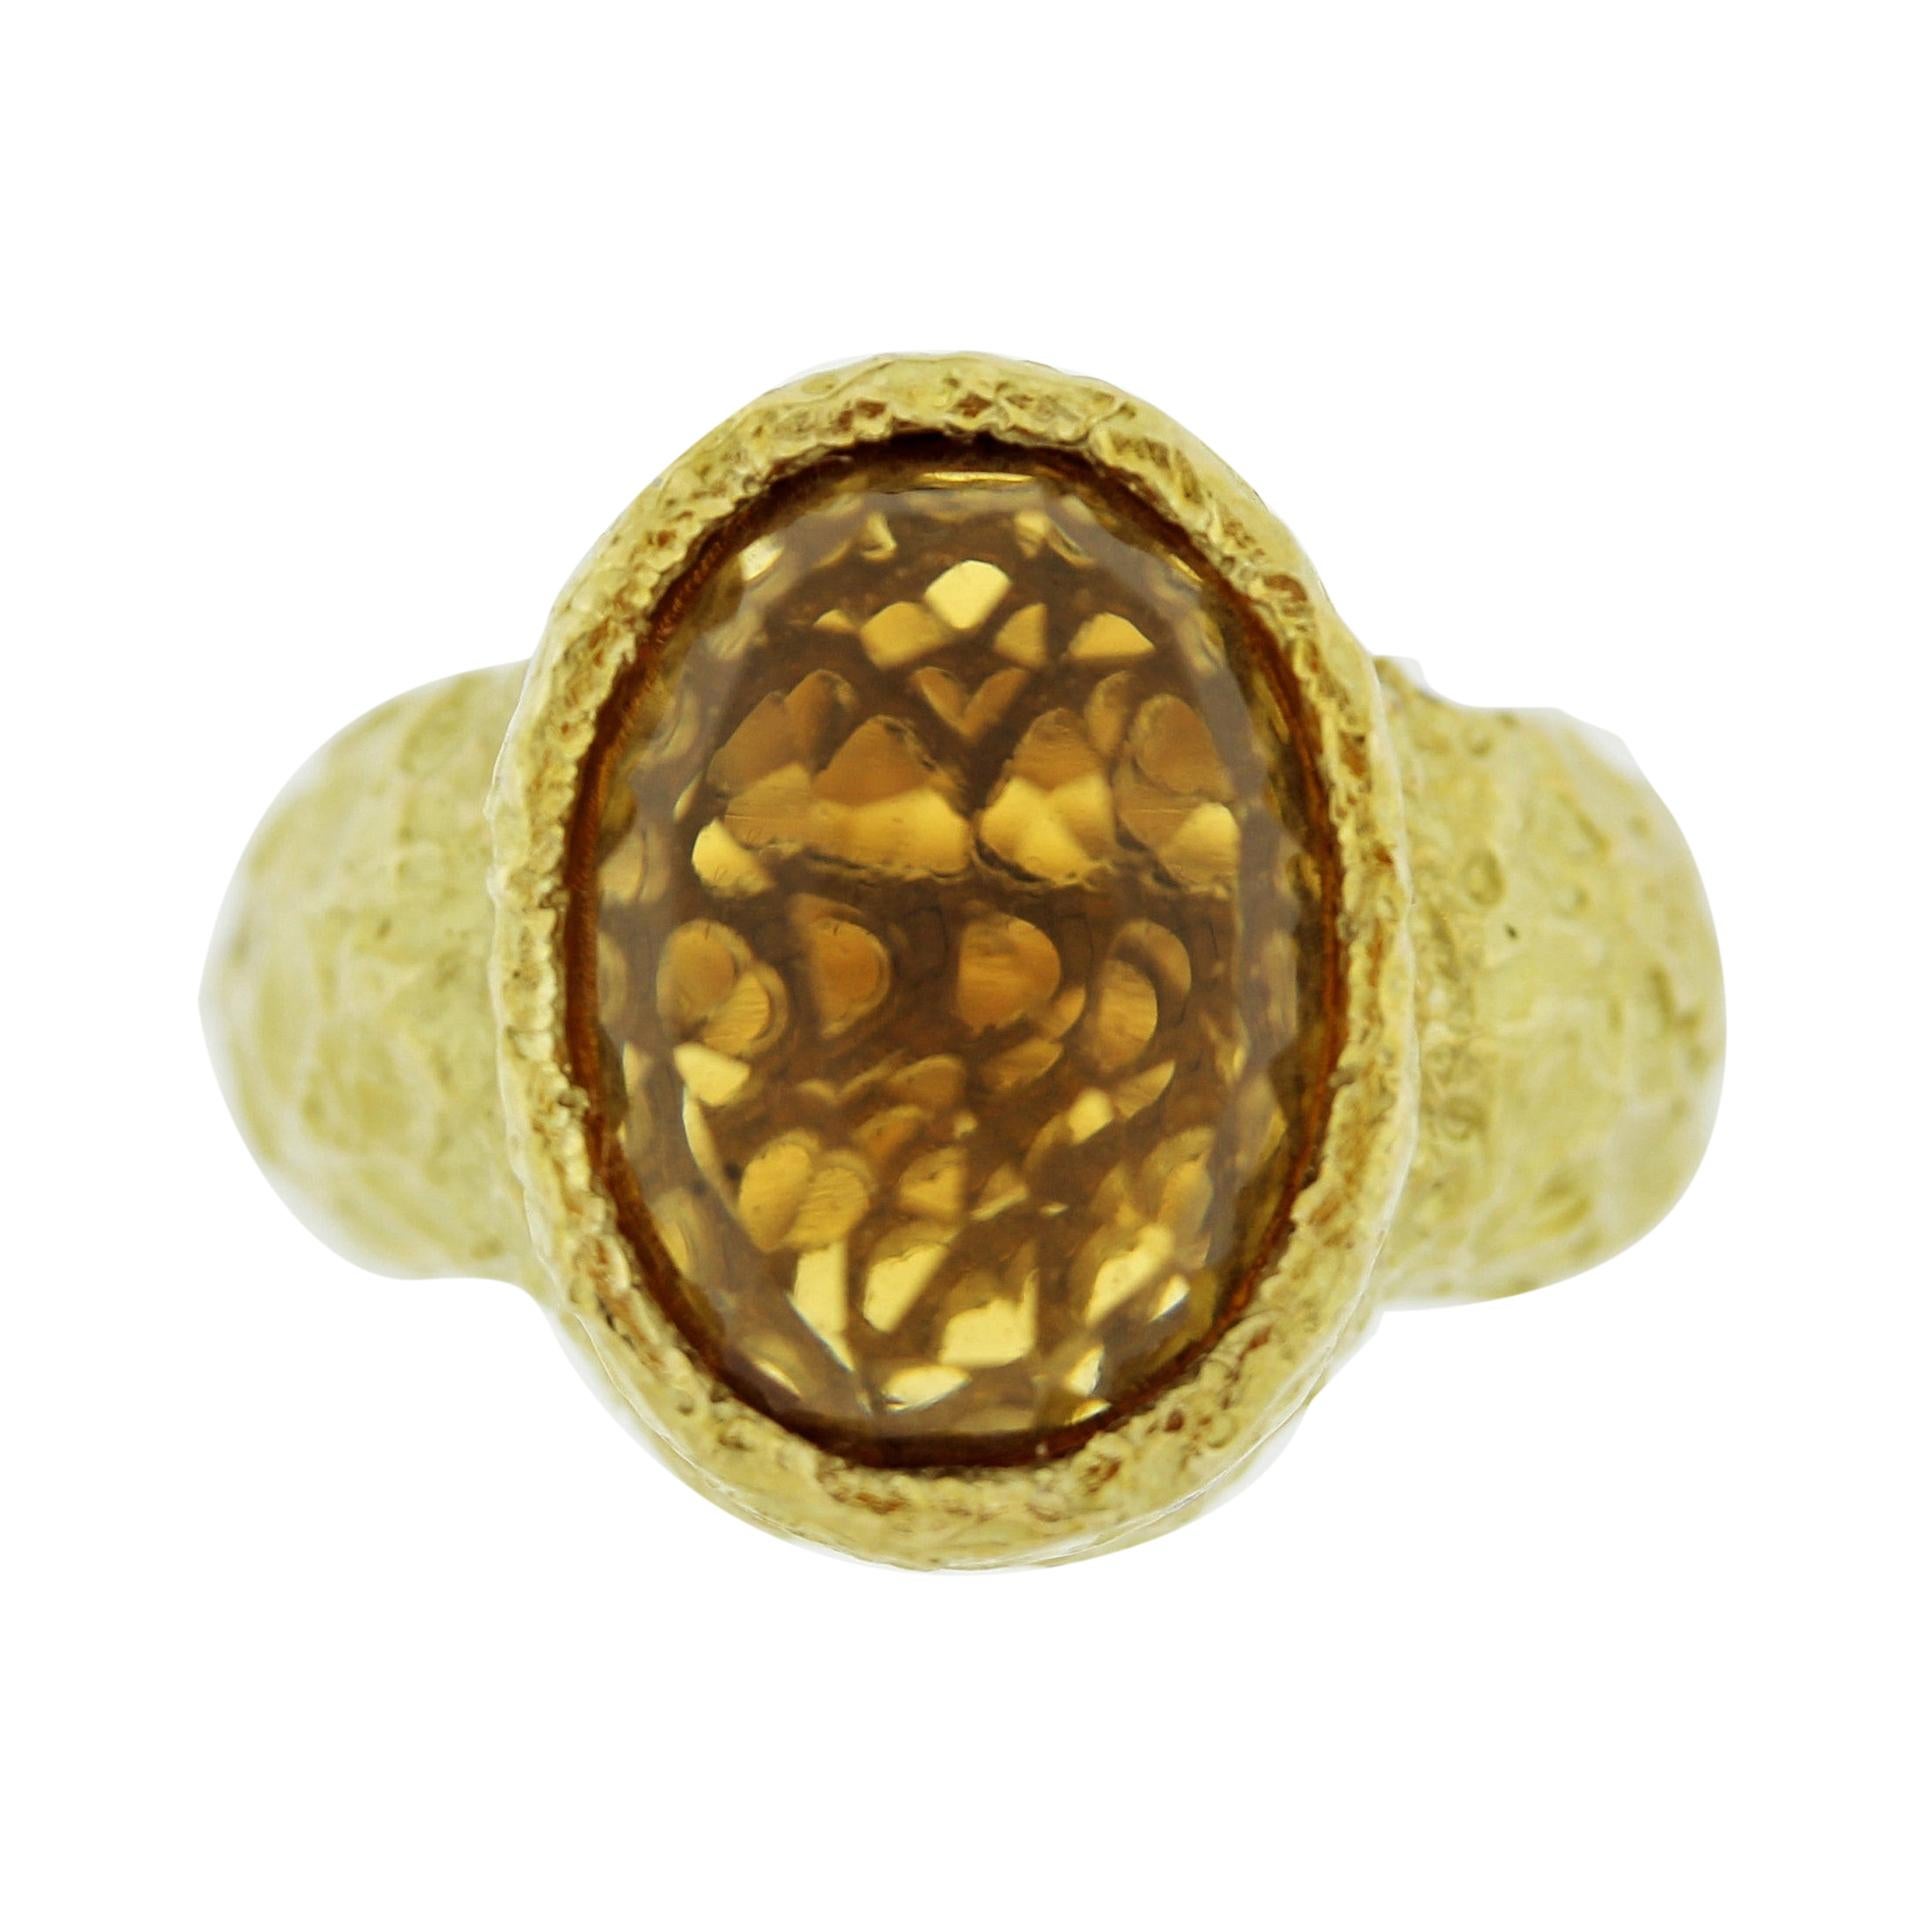 Citrine Diamond Gold Dome Cocktail Ring